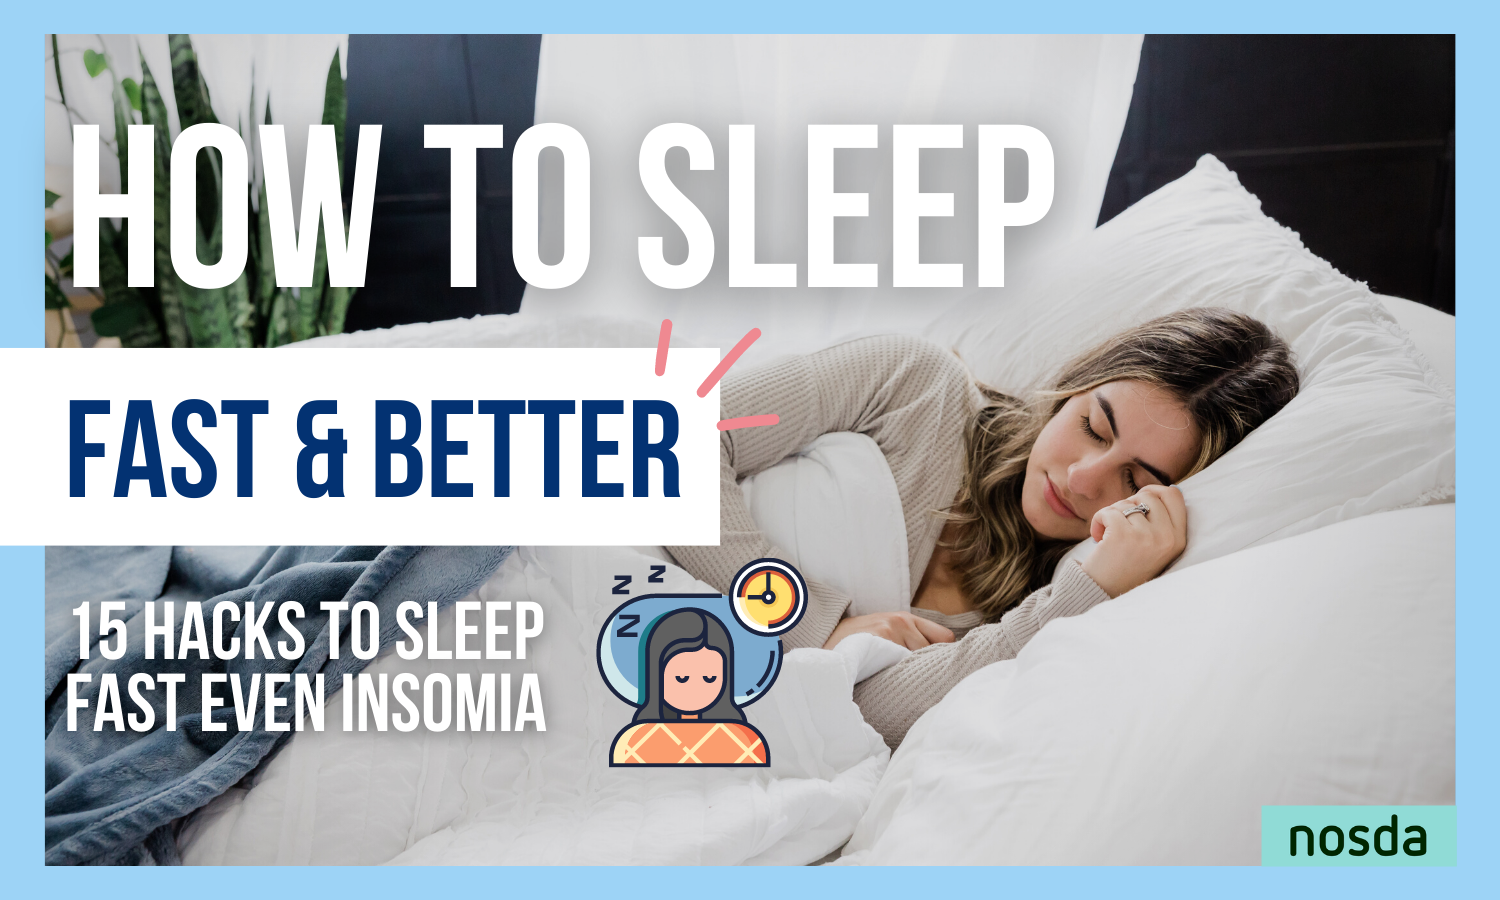 how to sleep fast and better - nosda mattress